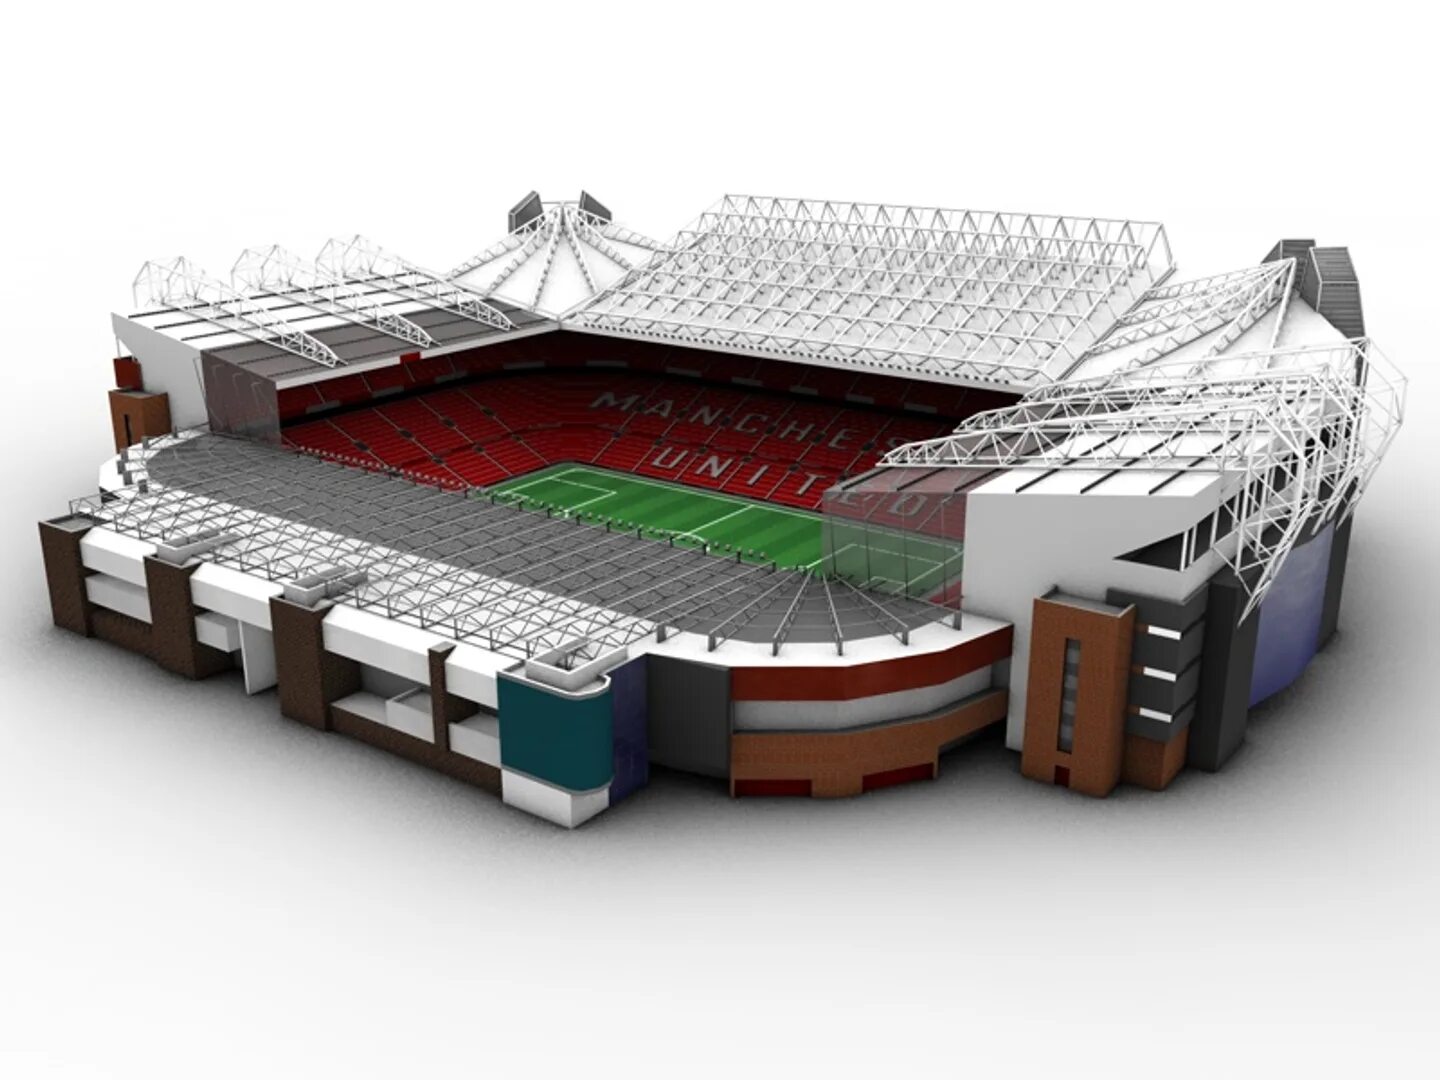 Продажа стадиона. Модель стадиона Олд Траффорд. Олд Траффорд Манчестер стадион 2023. Новый стадион Манчестер Юнайтед.